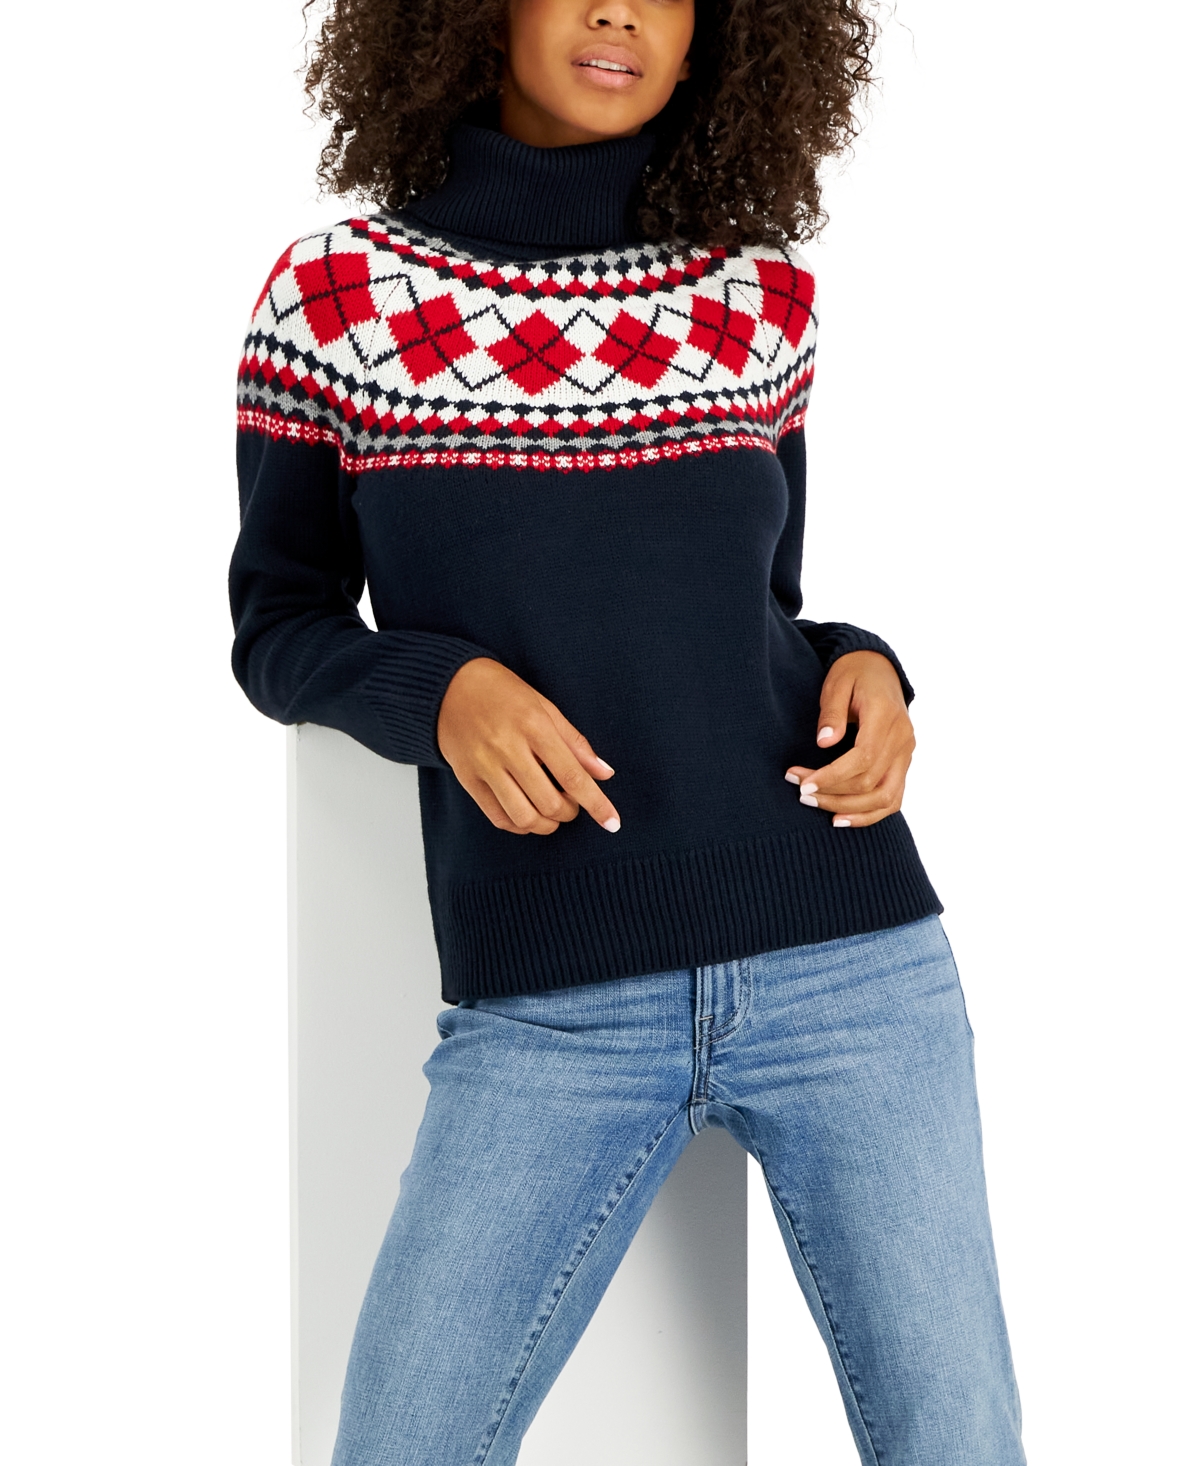 Tommy Hilfiger Women's Argyle Turtleneck Sweater